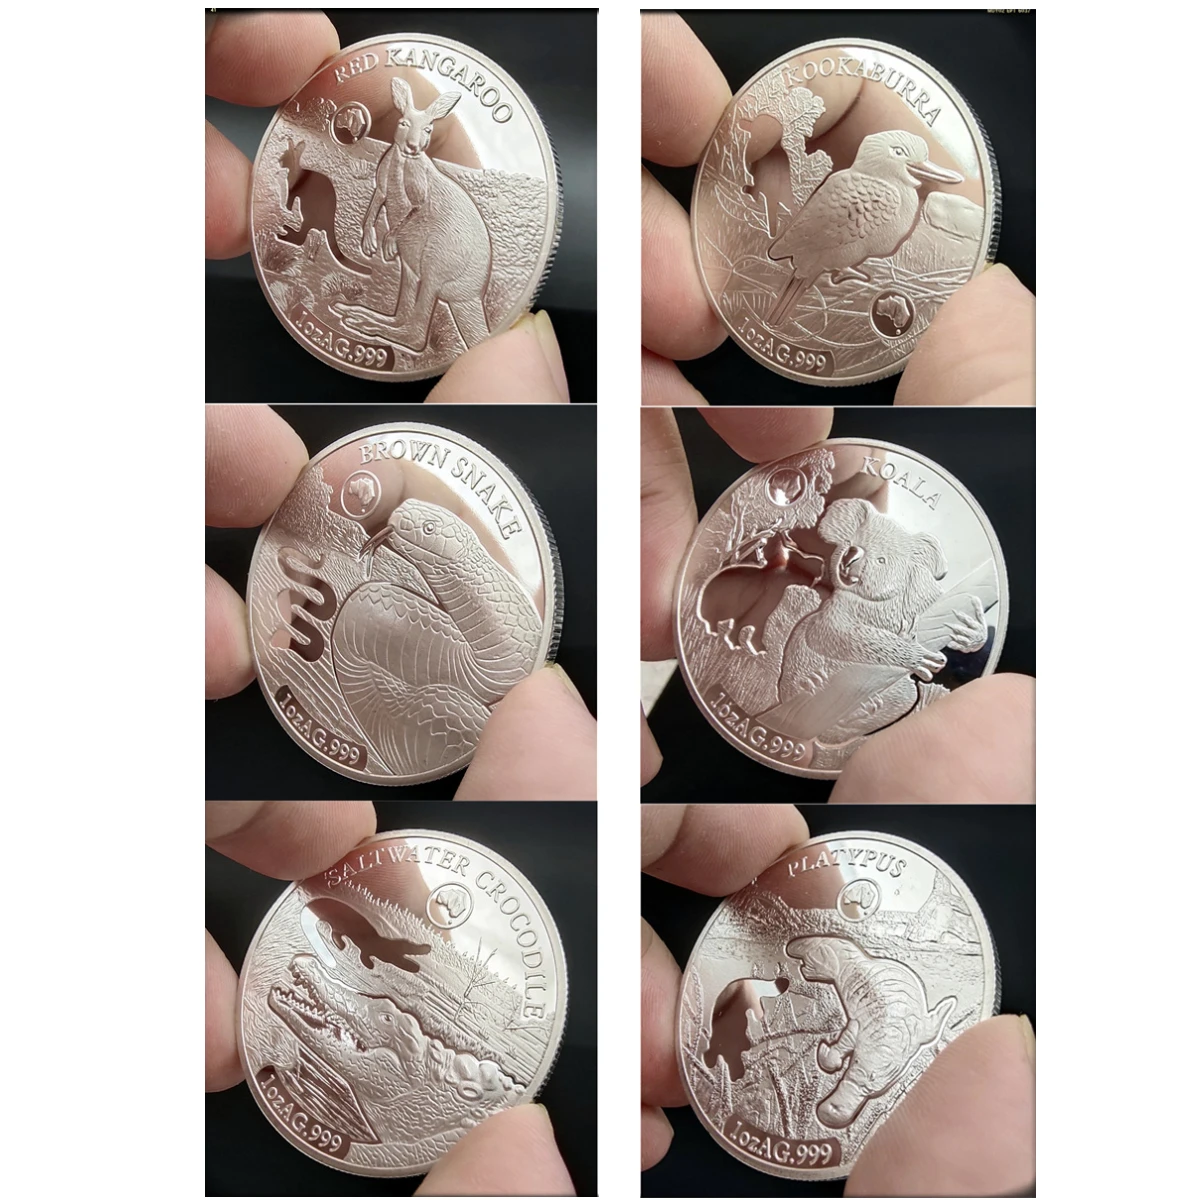 

6Pcs/Set Australian Animals Collectible Coins Kangaroo Koala Crocodile Snake Kookaburra Souvenir Coin Set Home Decor Art Crafts